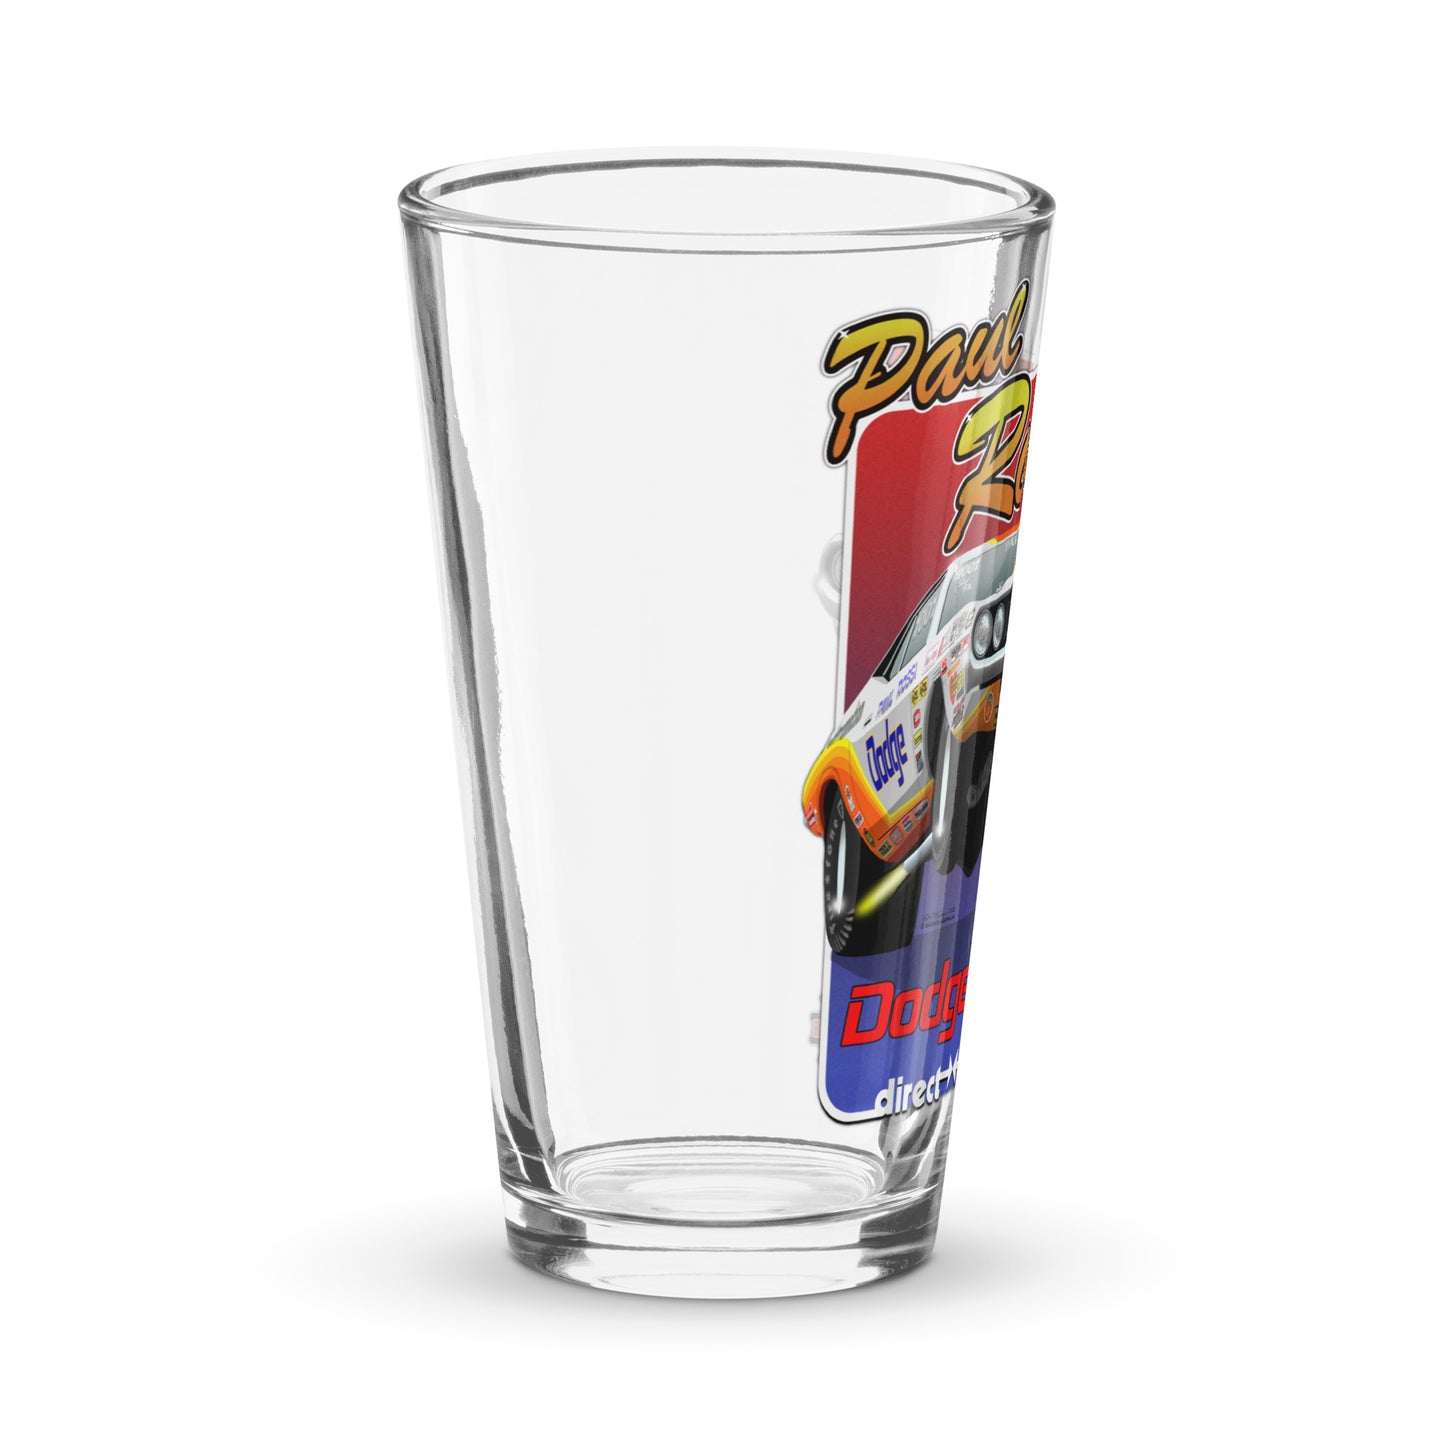 Paul Rossi Challenger Wheelie Shaker pint glass